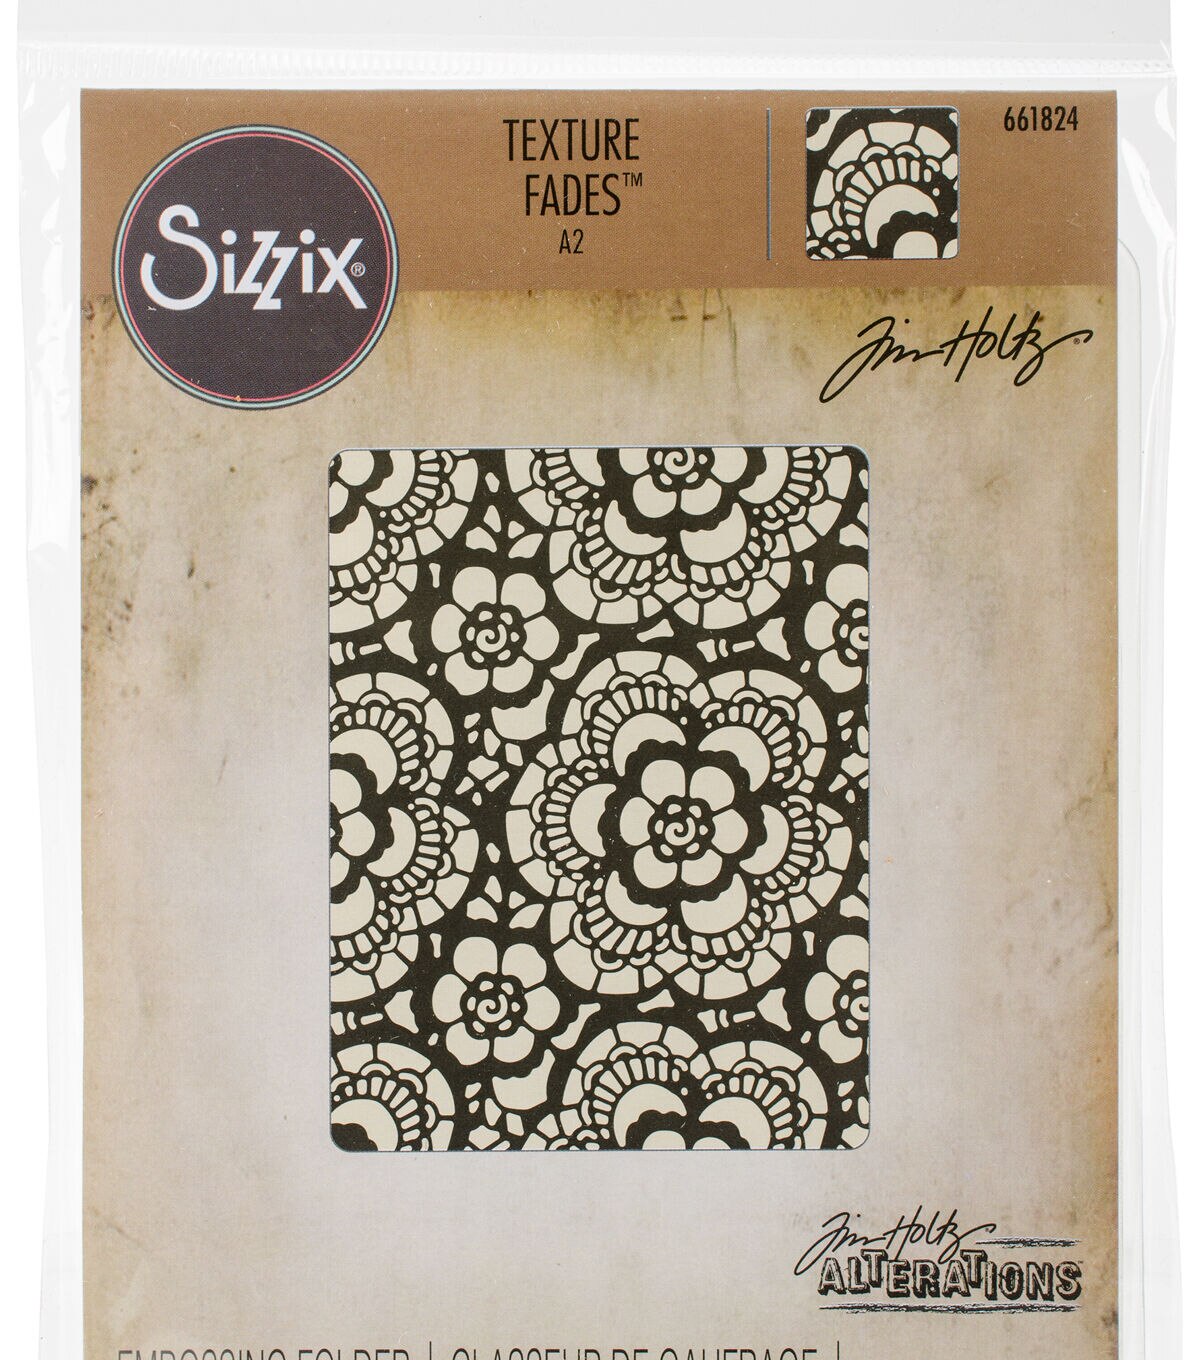 Tim Holtz Sizzix 3D Texture Fades Embossing Folders Botanical and Mechanics 2 item bundle 